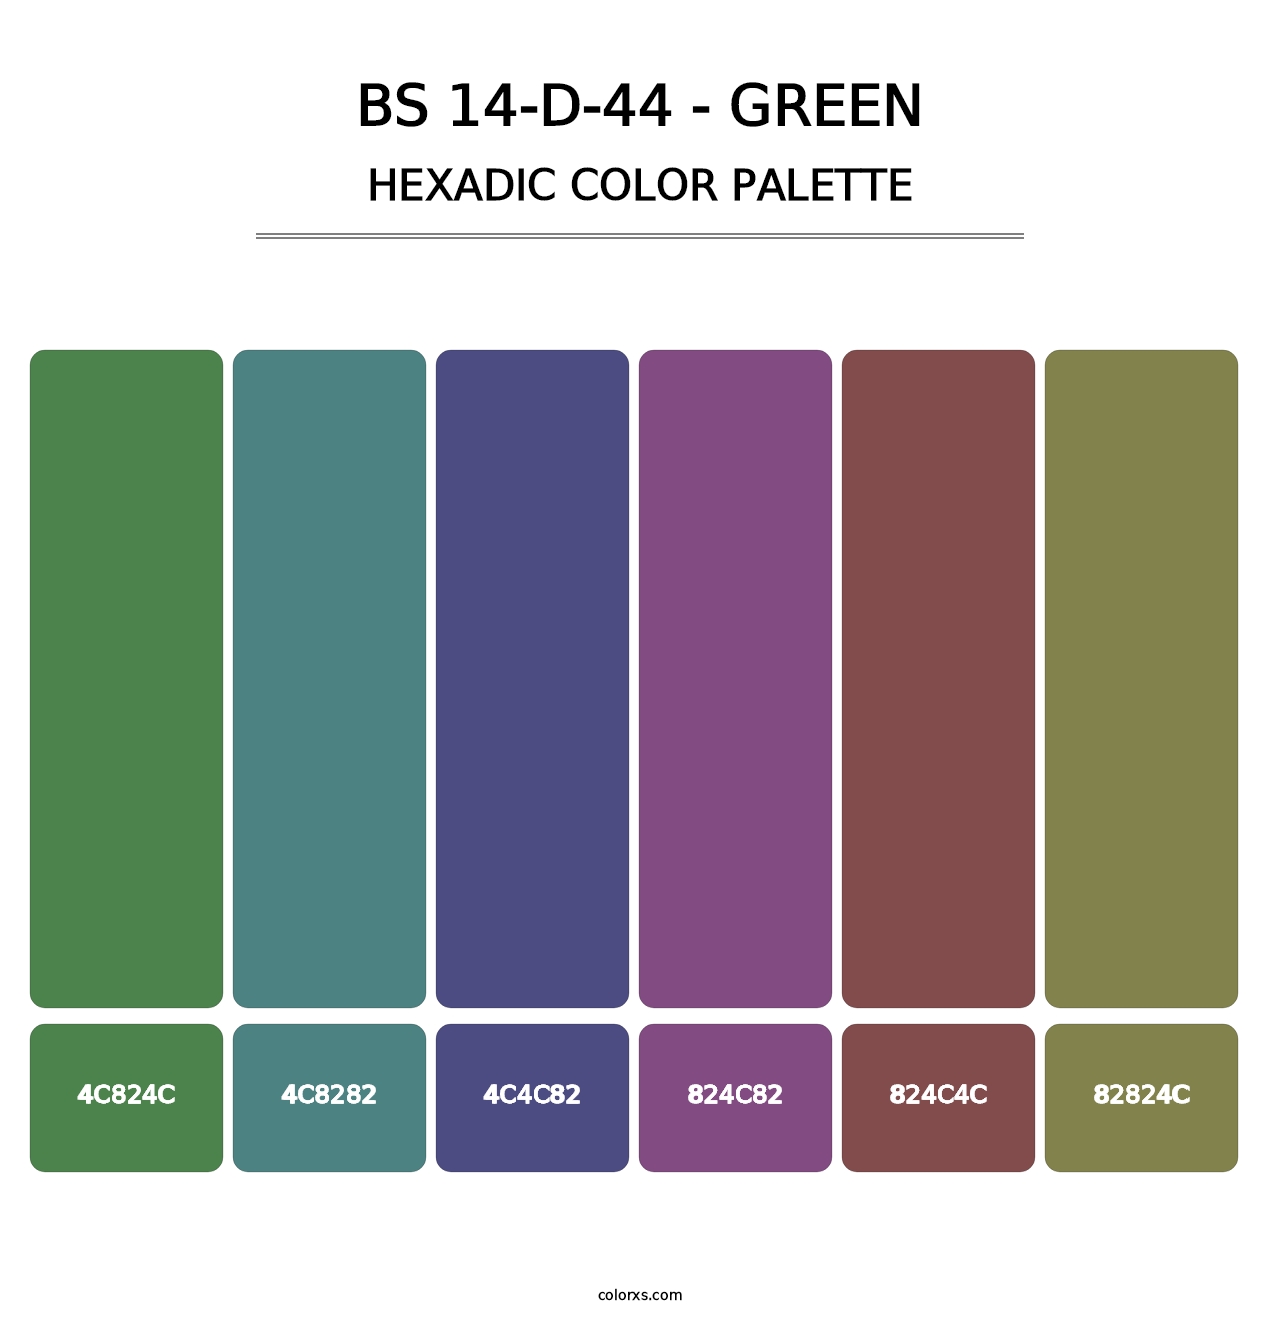 BS 14-D-44 - Green - Hexadic Color Palette